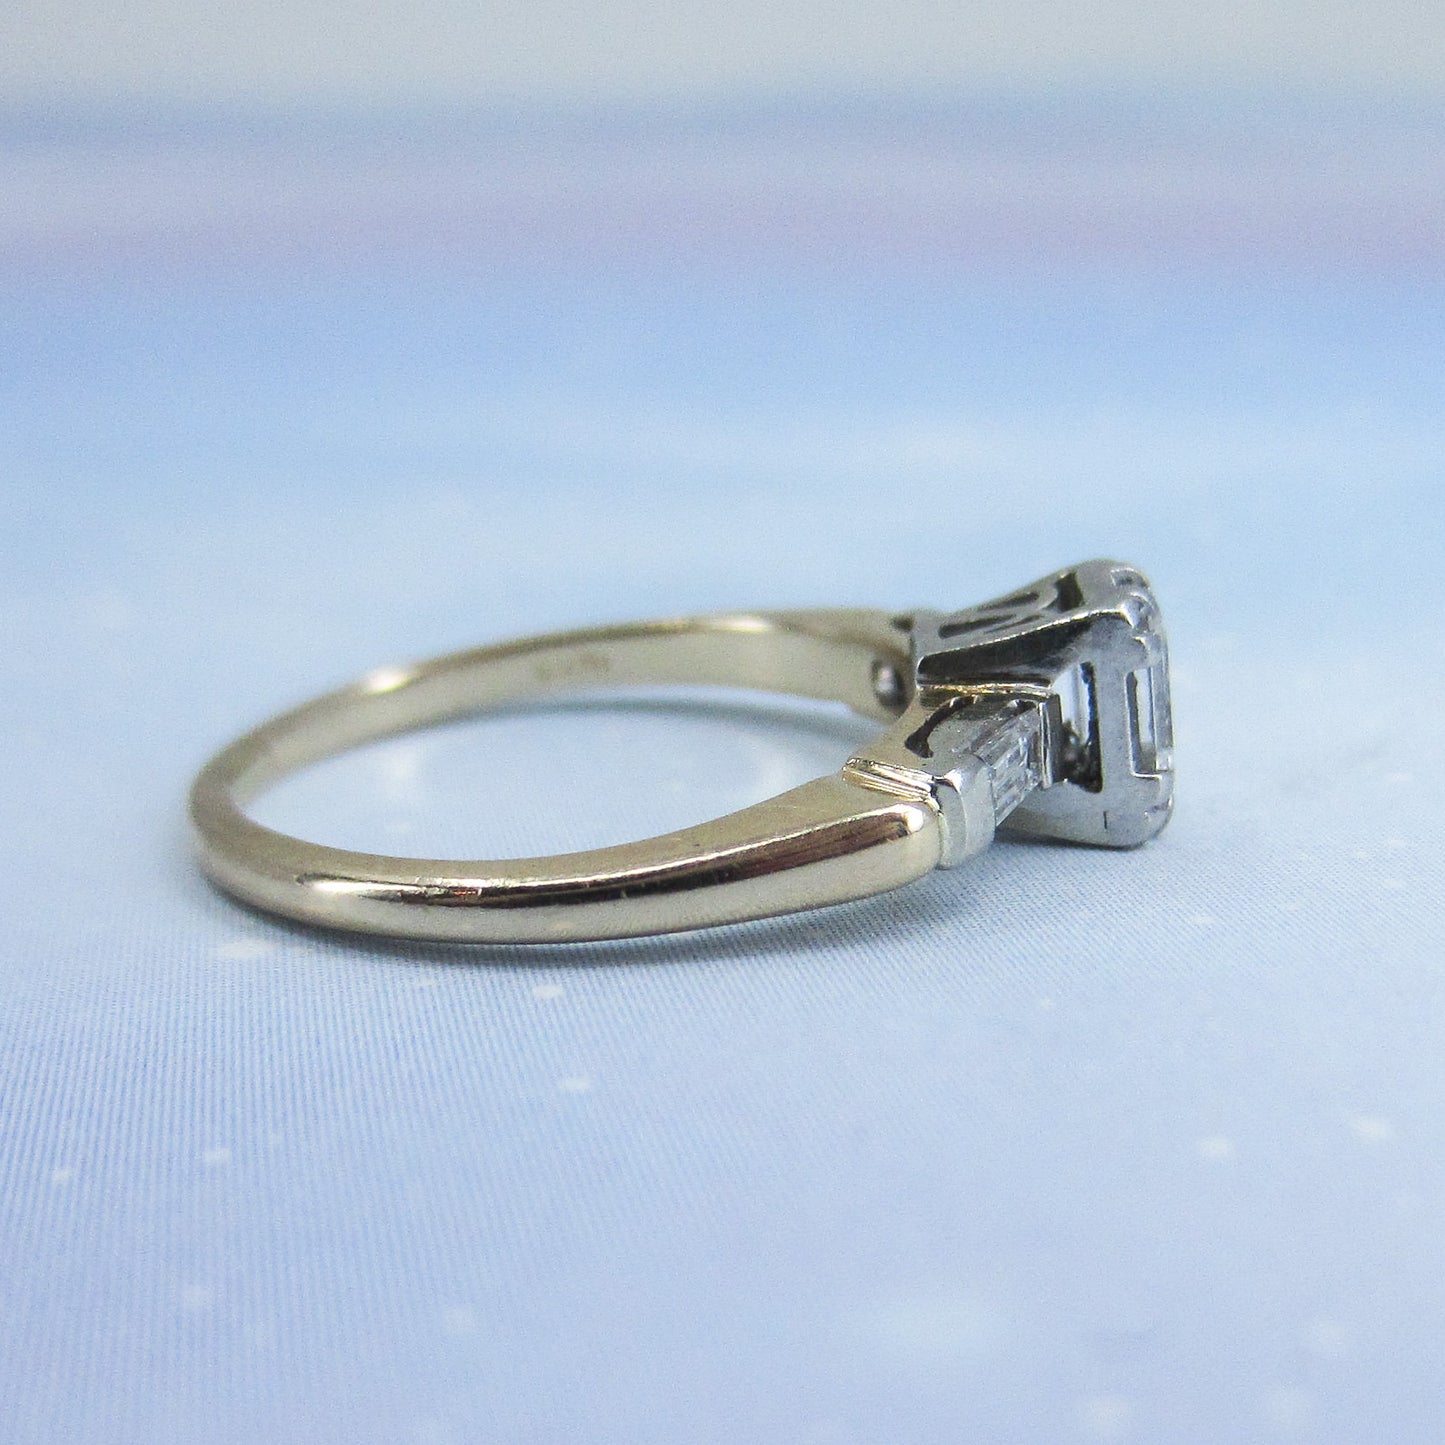 SOLD--Vintage Emerald Cut Diamond Engagement Ring Plat/14k c. 1940